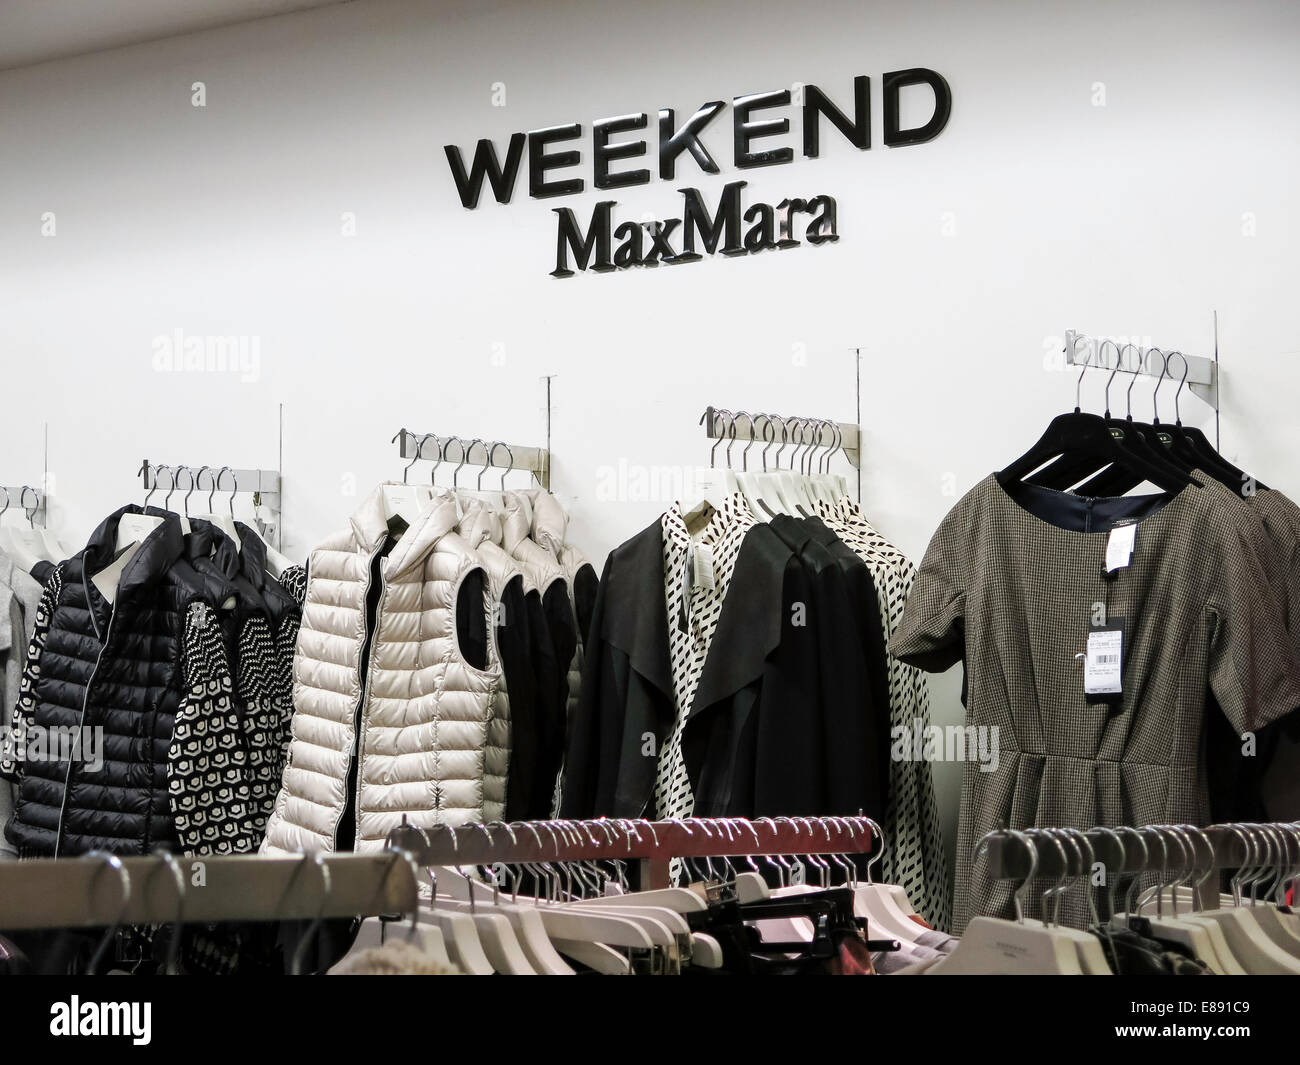 L'article Manteau Max Mara, du grand magasin Macy's Herald Square, New York, Banque D'Images